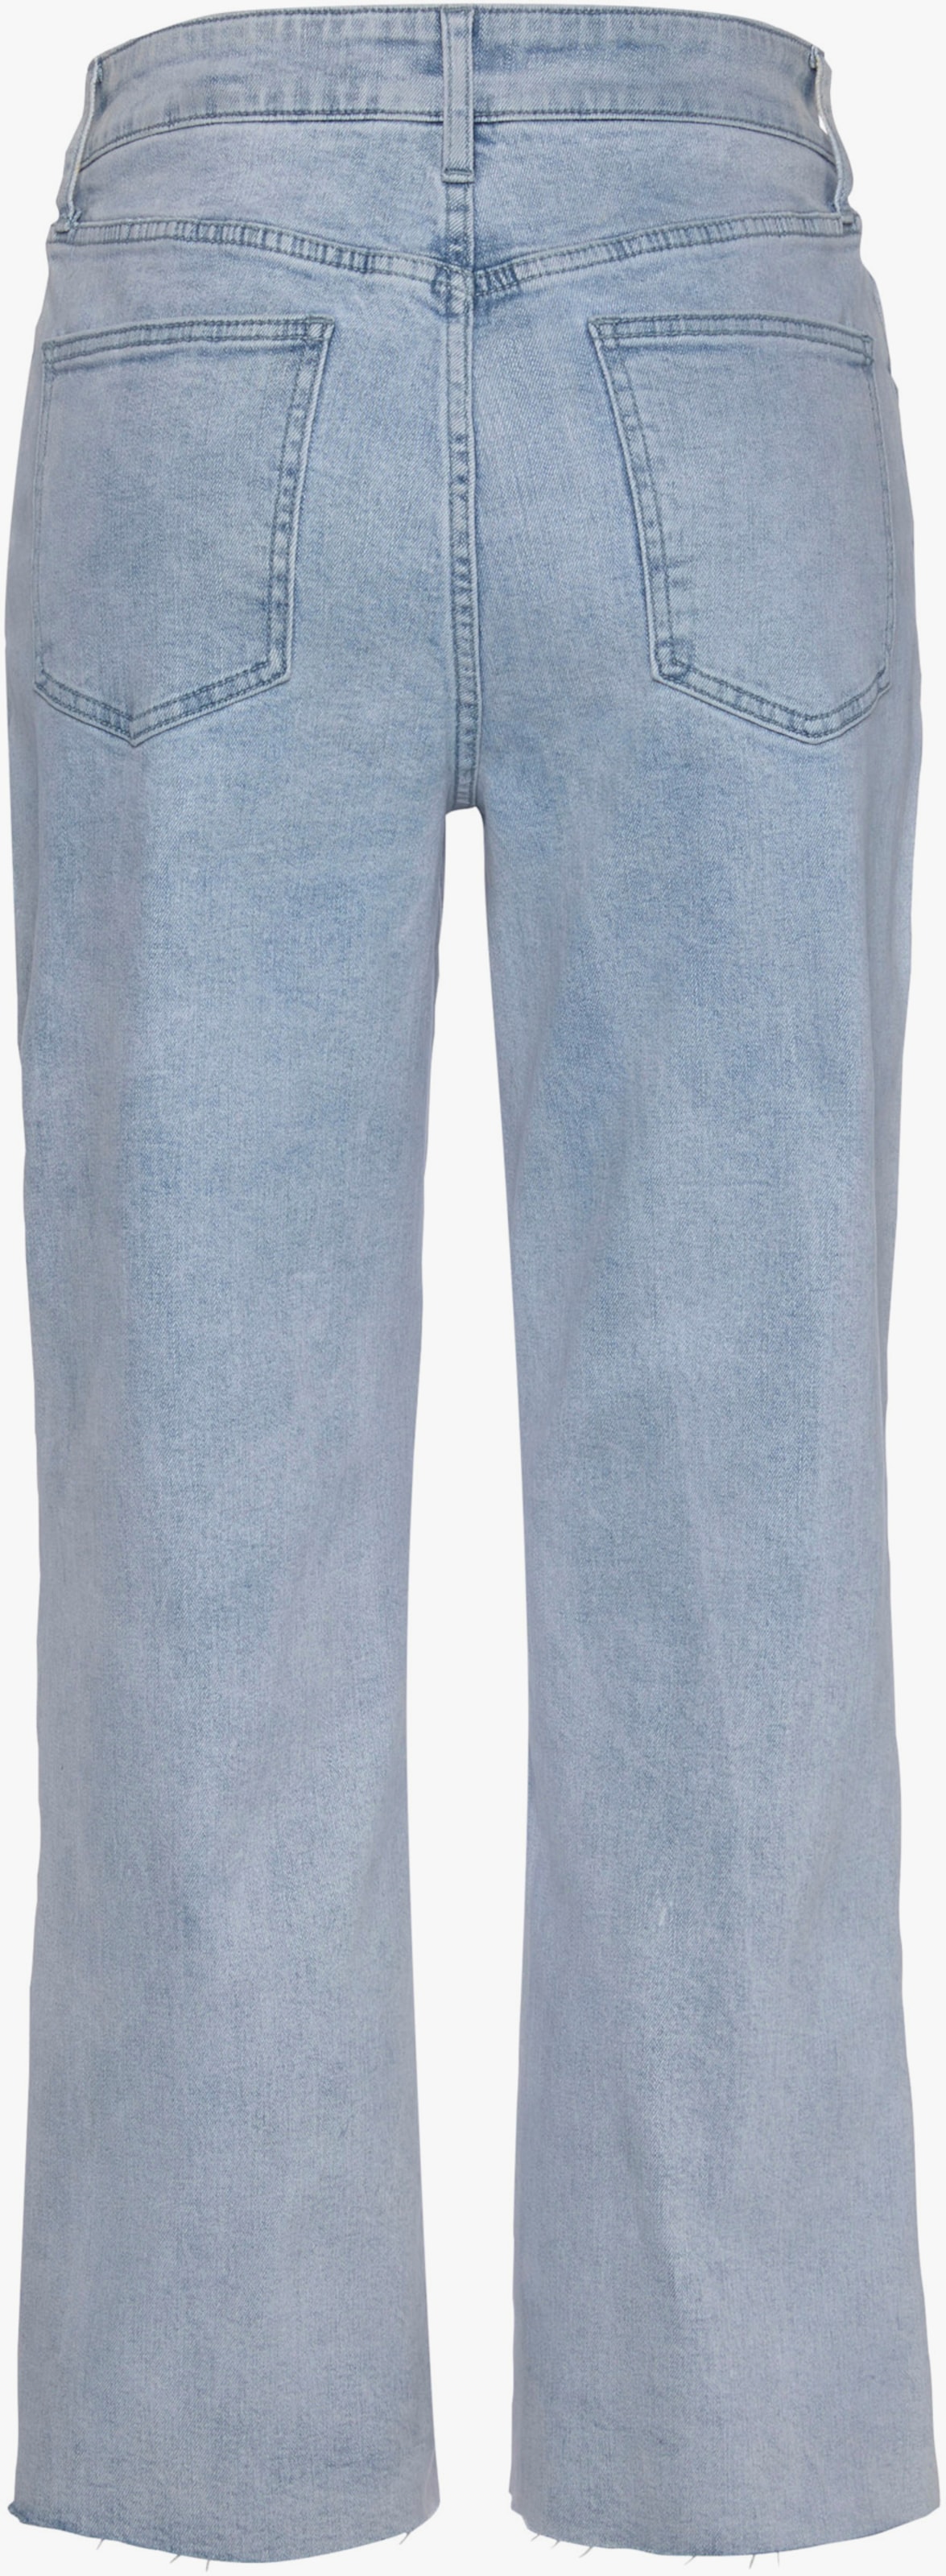 LASCANA 7/8-Jeans - hellblau-washed